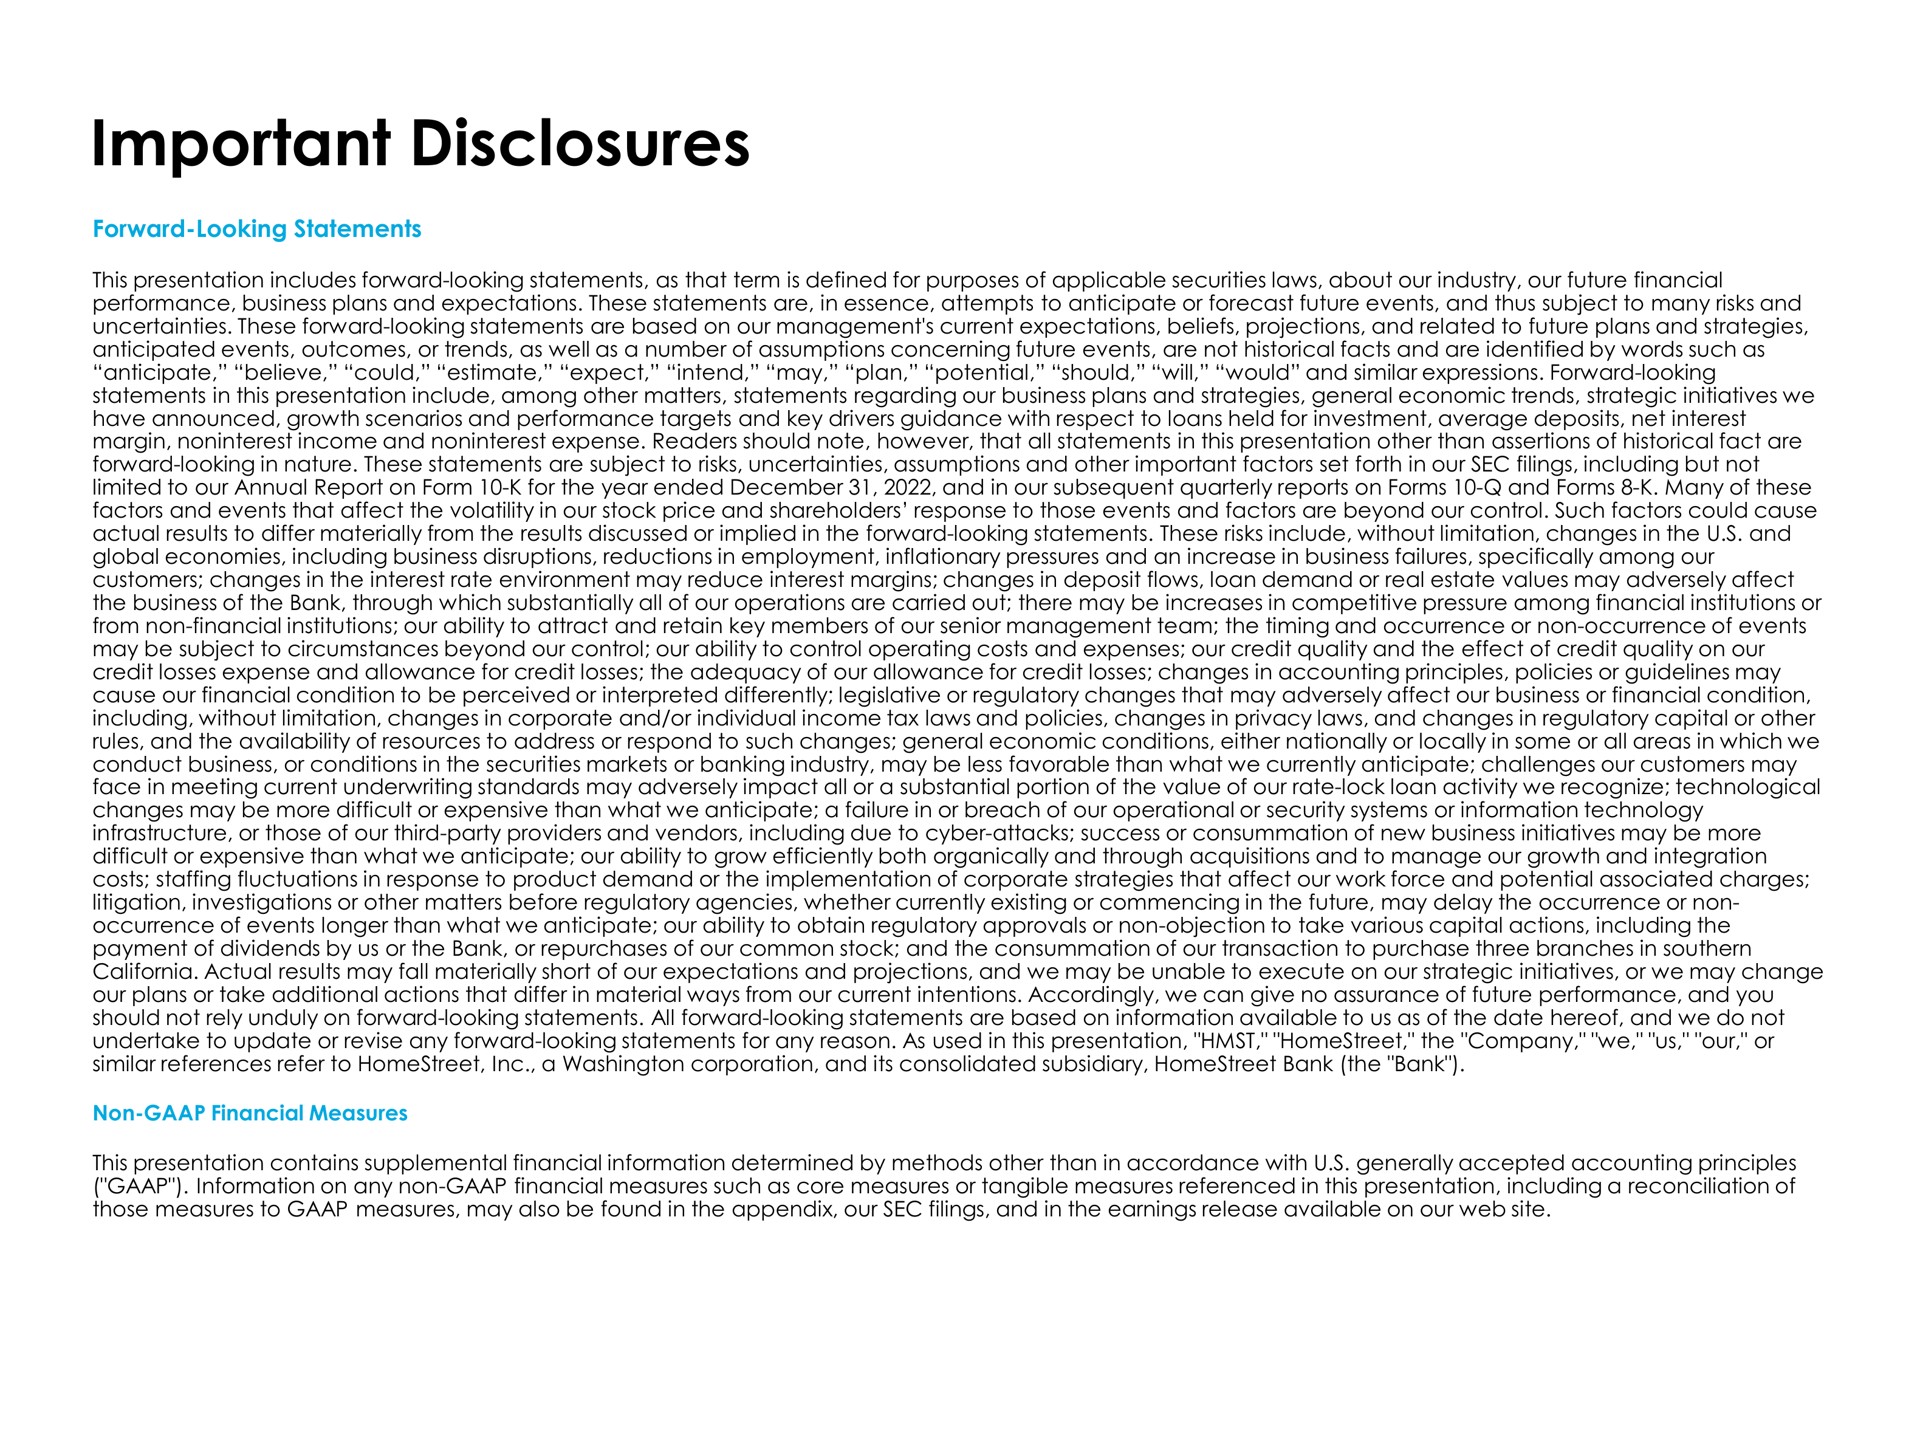 important disclosures | HomeStreet